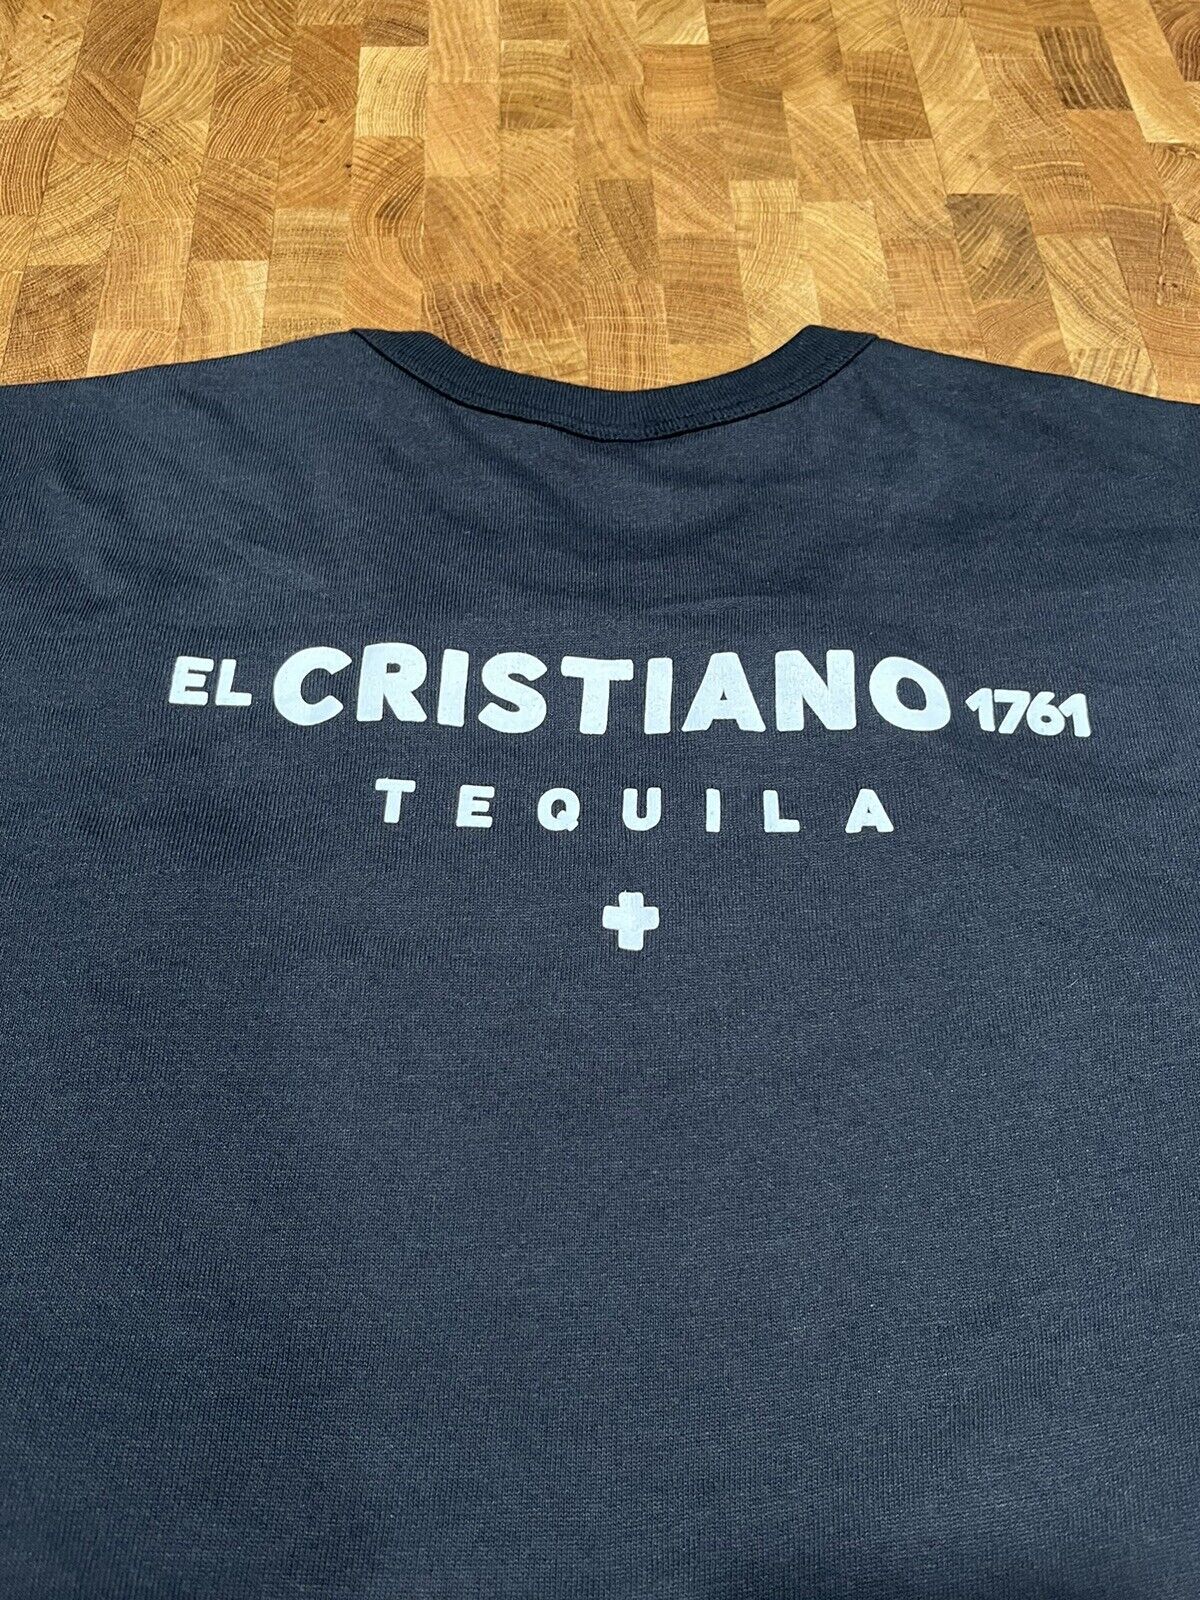 El Cristiano Tequila Black Shirt (XL)